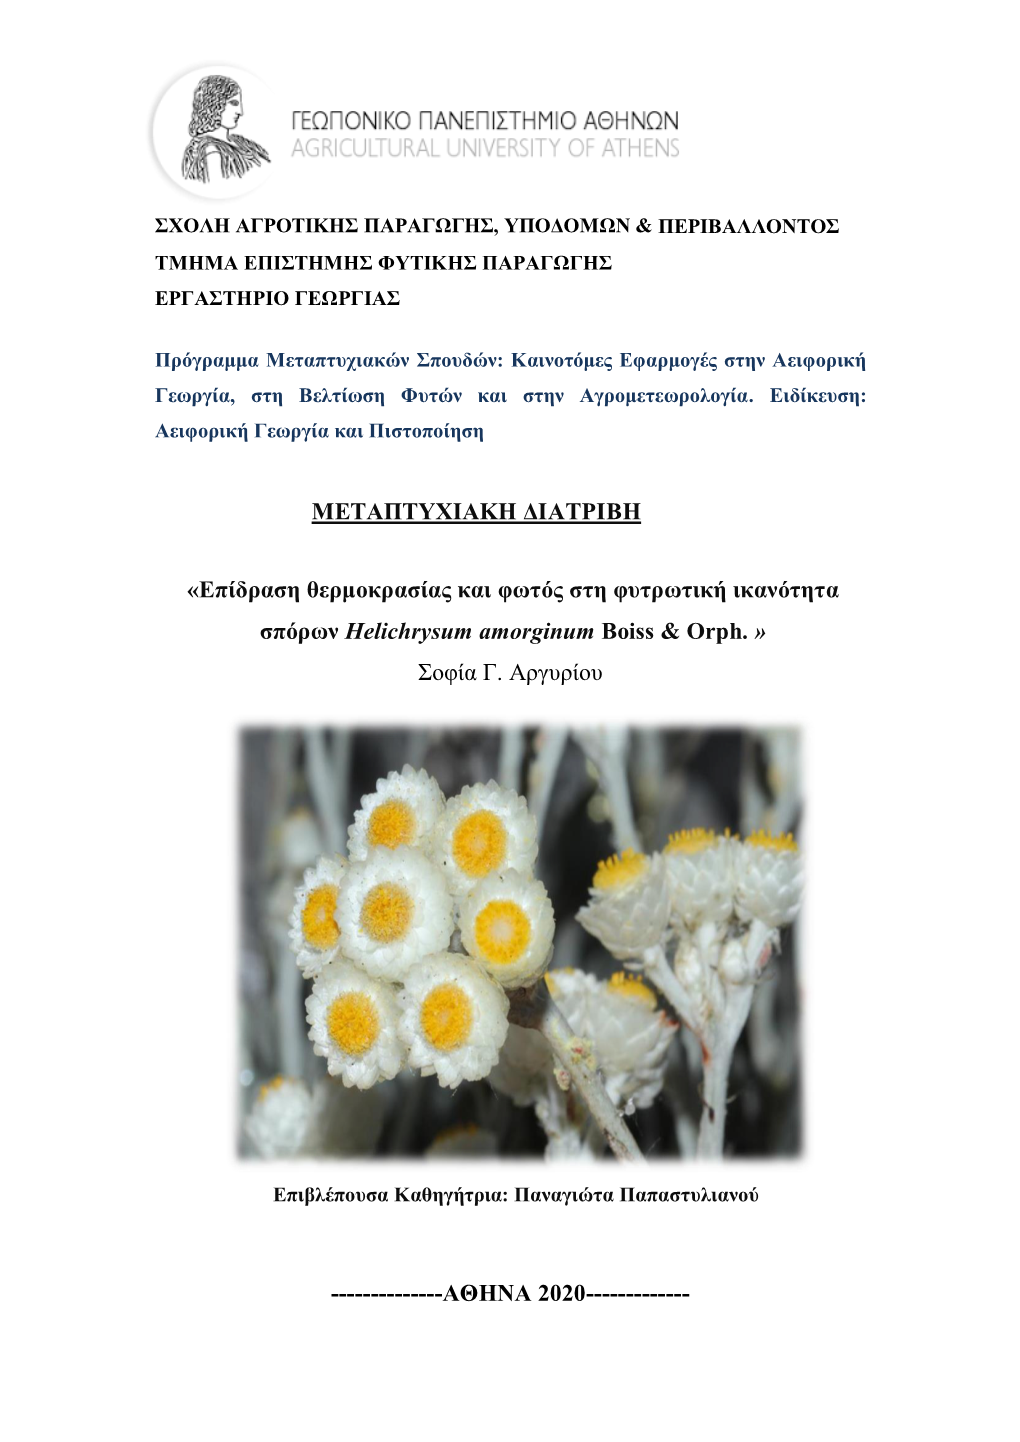 Eπίδραση Θερμοκρασίας Και Φωτός Στη Φυτρωτική Ικανότητα Σπόρων Helichrysum Amorginum Boiss & Orph